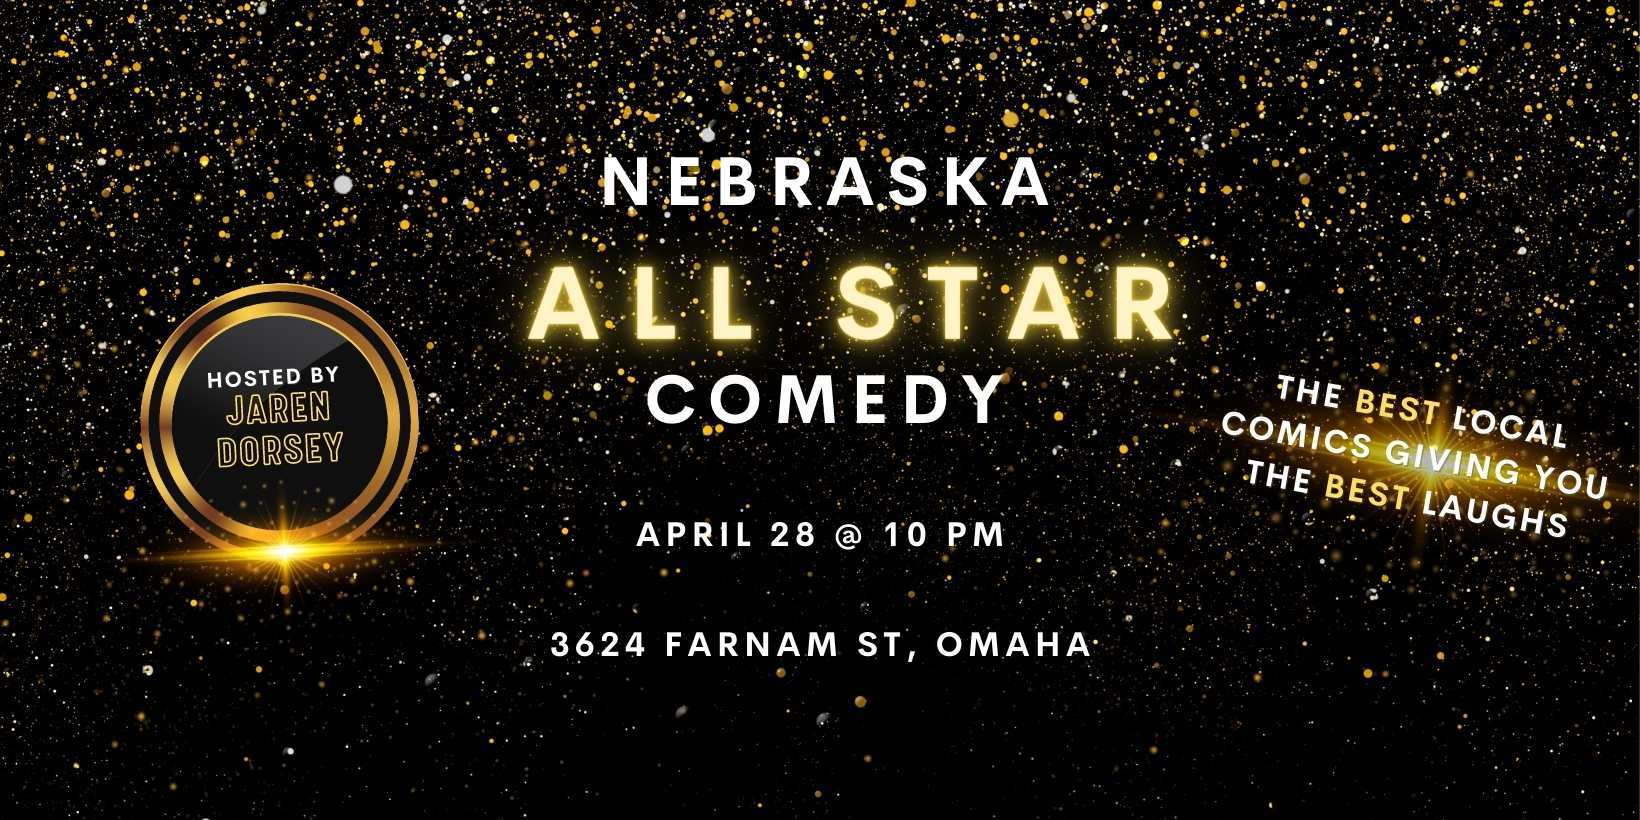 Nebraska All Star Comedy promotional image